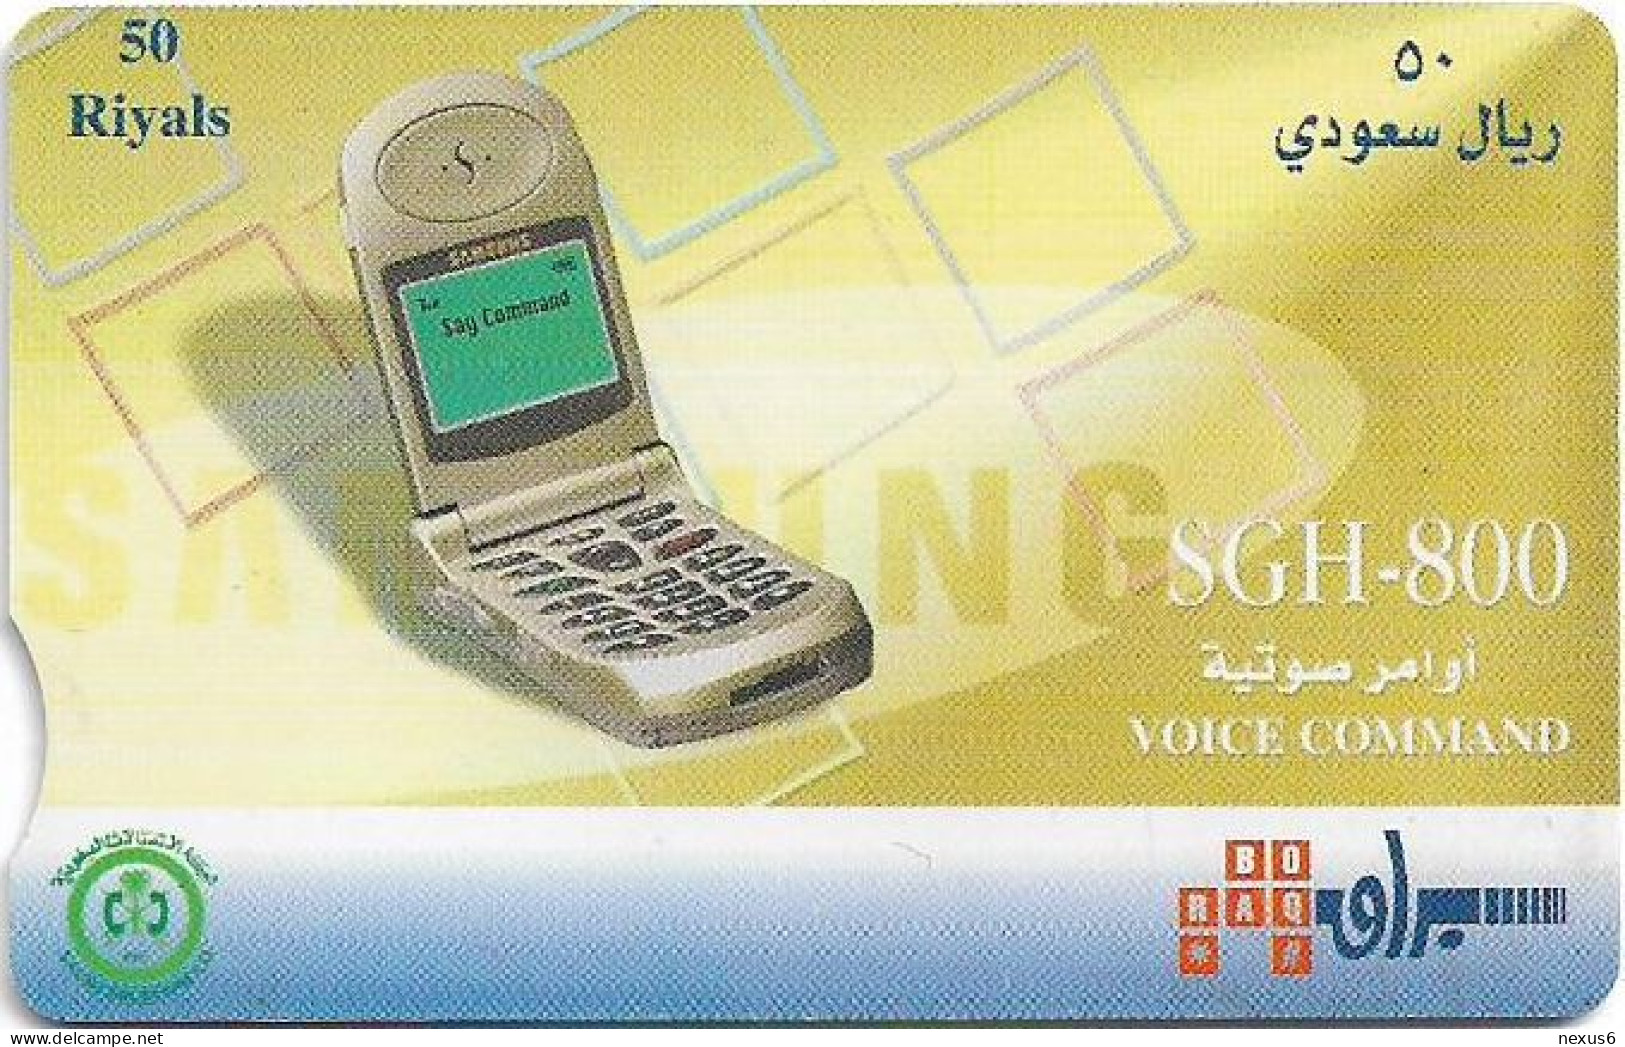 Saudi Arabia - STC (Chip - Boraq - Mobile Samsung SGH-800, Chip Siemens S5, 2001, 50SR, Used - Saudi Arabia